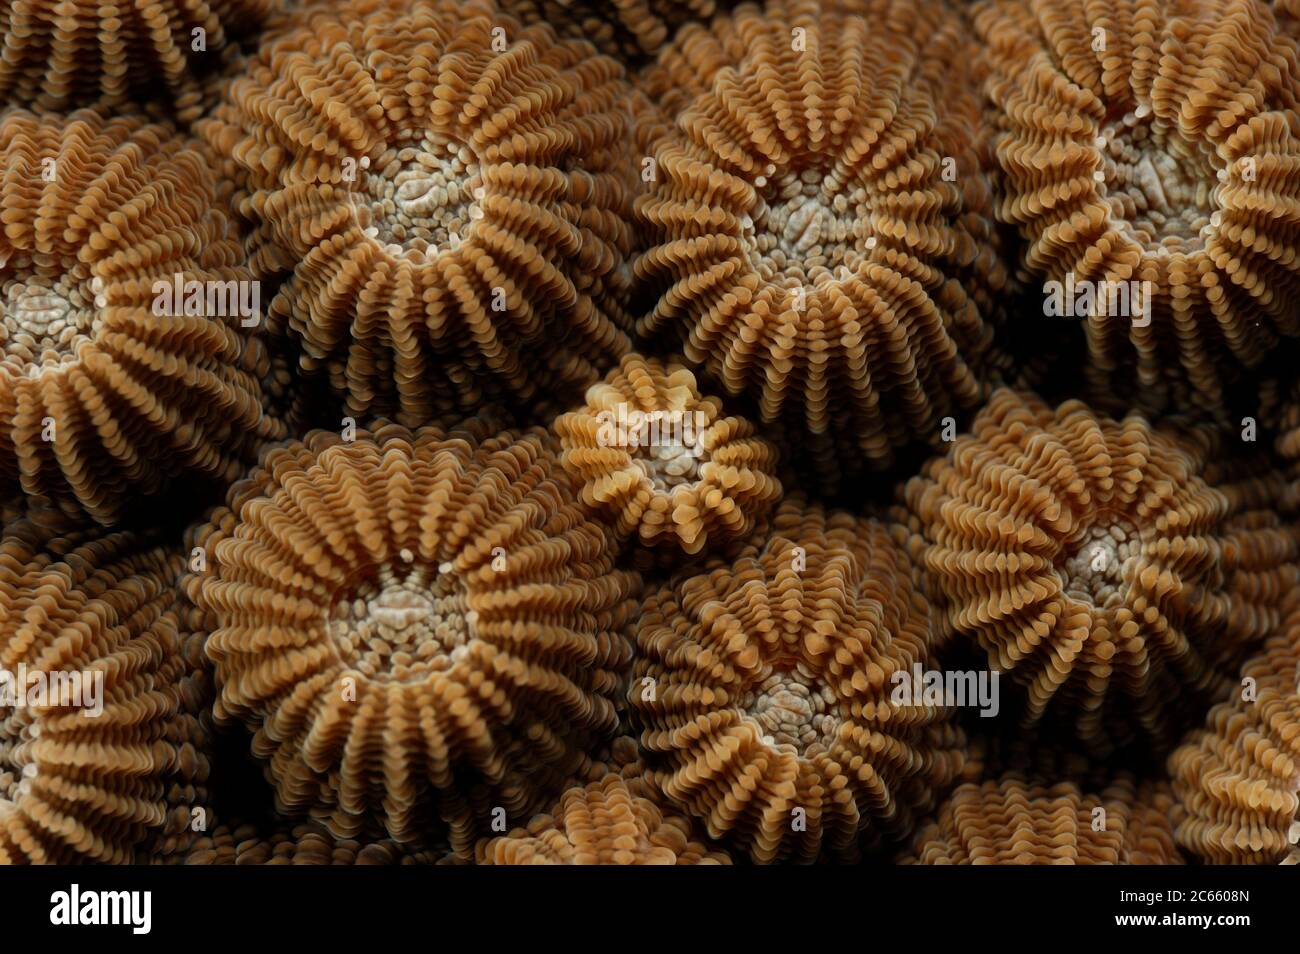 Diploastrea brain coral (Diploastrea heliopora) with closed polyps Raja Ampat, West Papua, Indonesia, Pacific Ocean Stock Photo